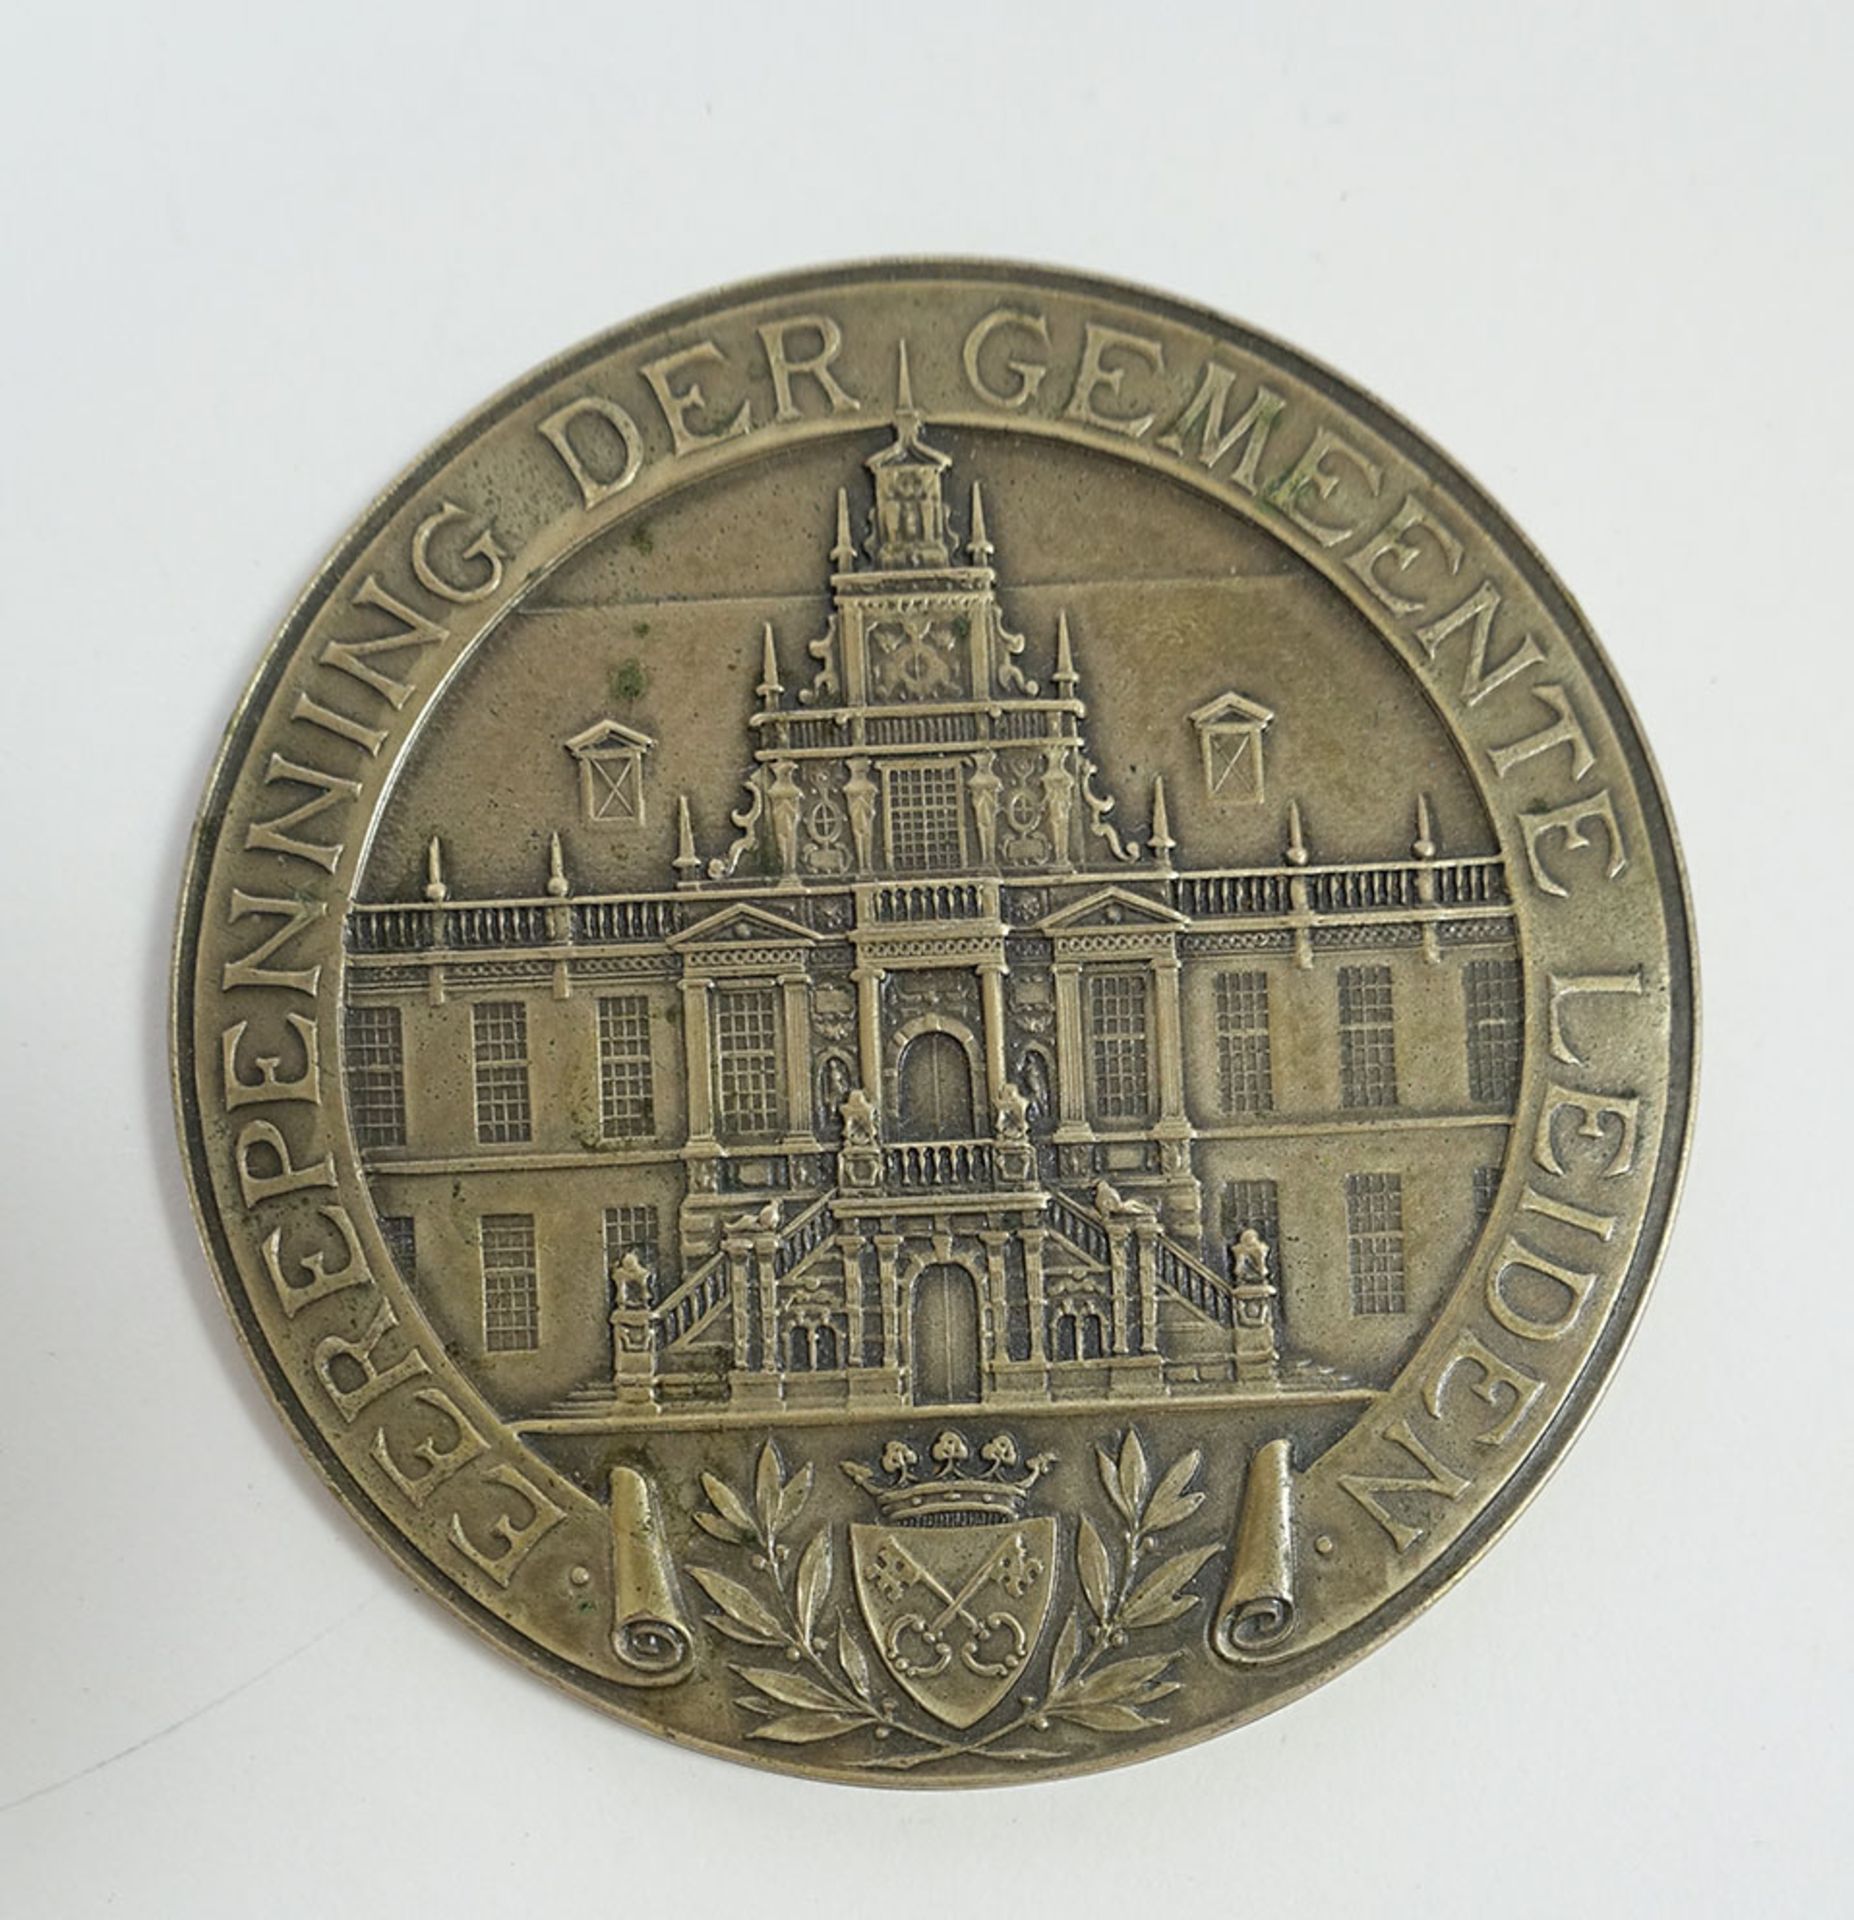 EEREPENNING DER GEMEENTE LEIDEN (voor) J.M.A. Biesheuvel, 3 oktober 1986. Brass medal w. on one